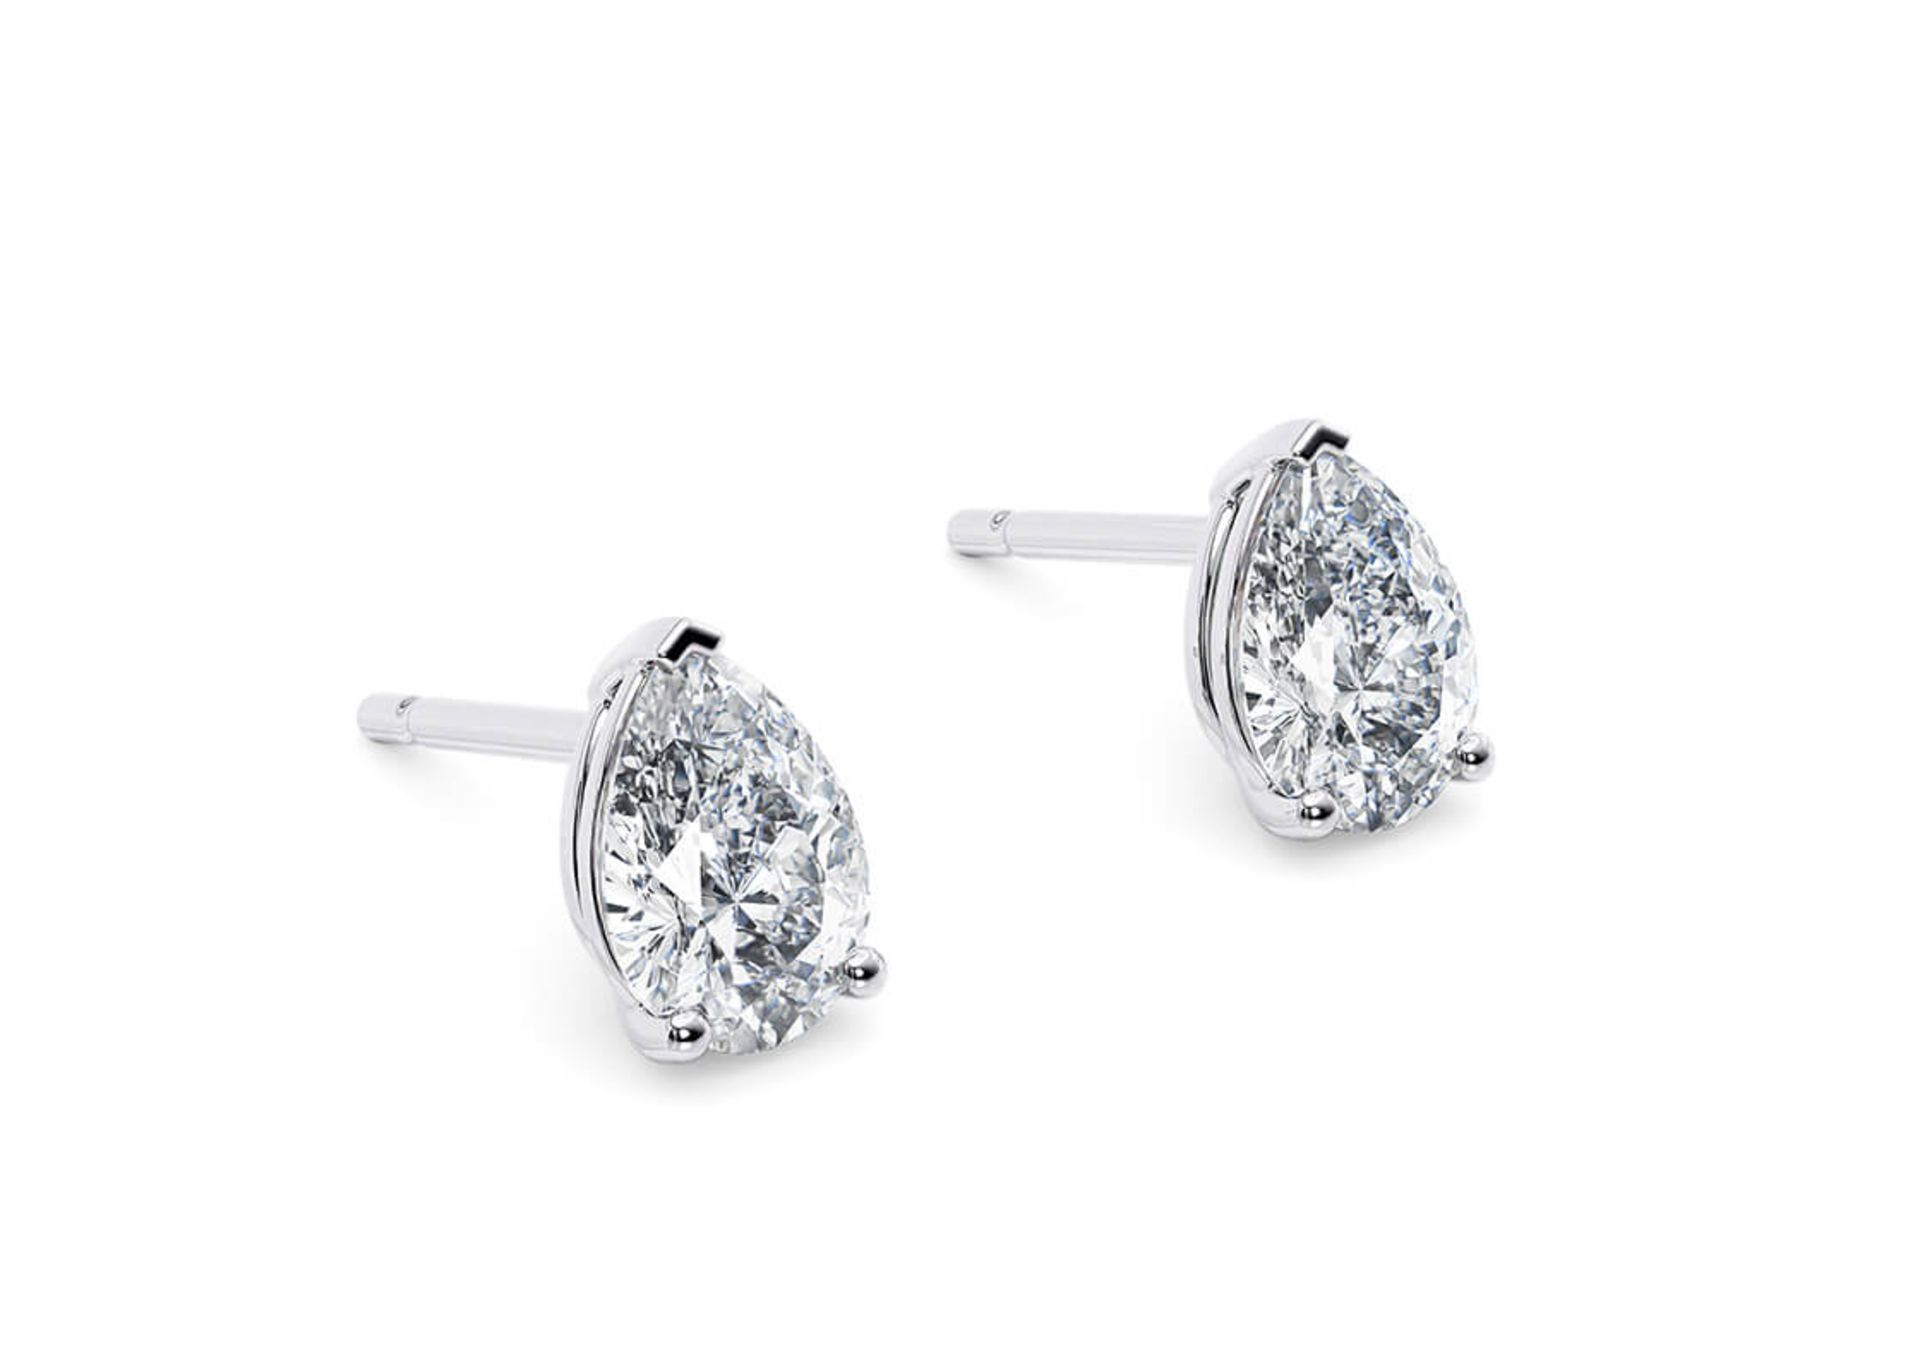 ** ON SALE ** Pear Cut Cut 4.00 Carat Diamond 18kt White Gold Earrings- E Colour VS Clarity IGI - Image 2 of 3